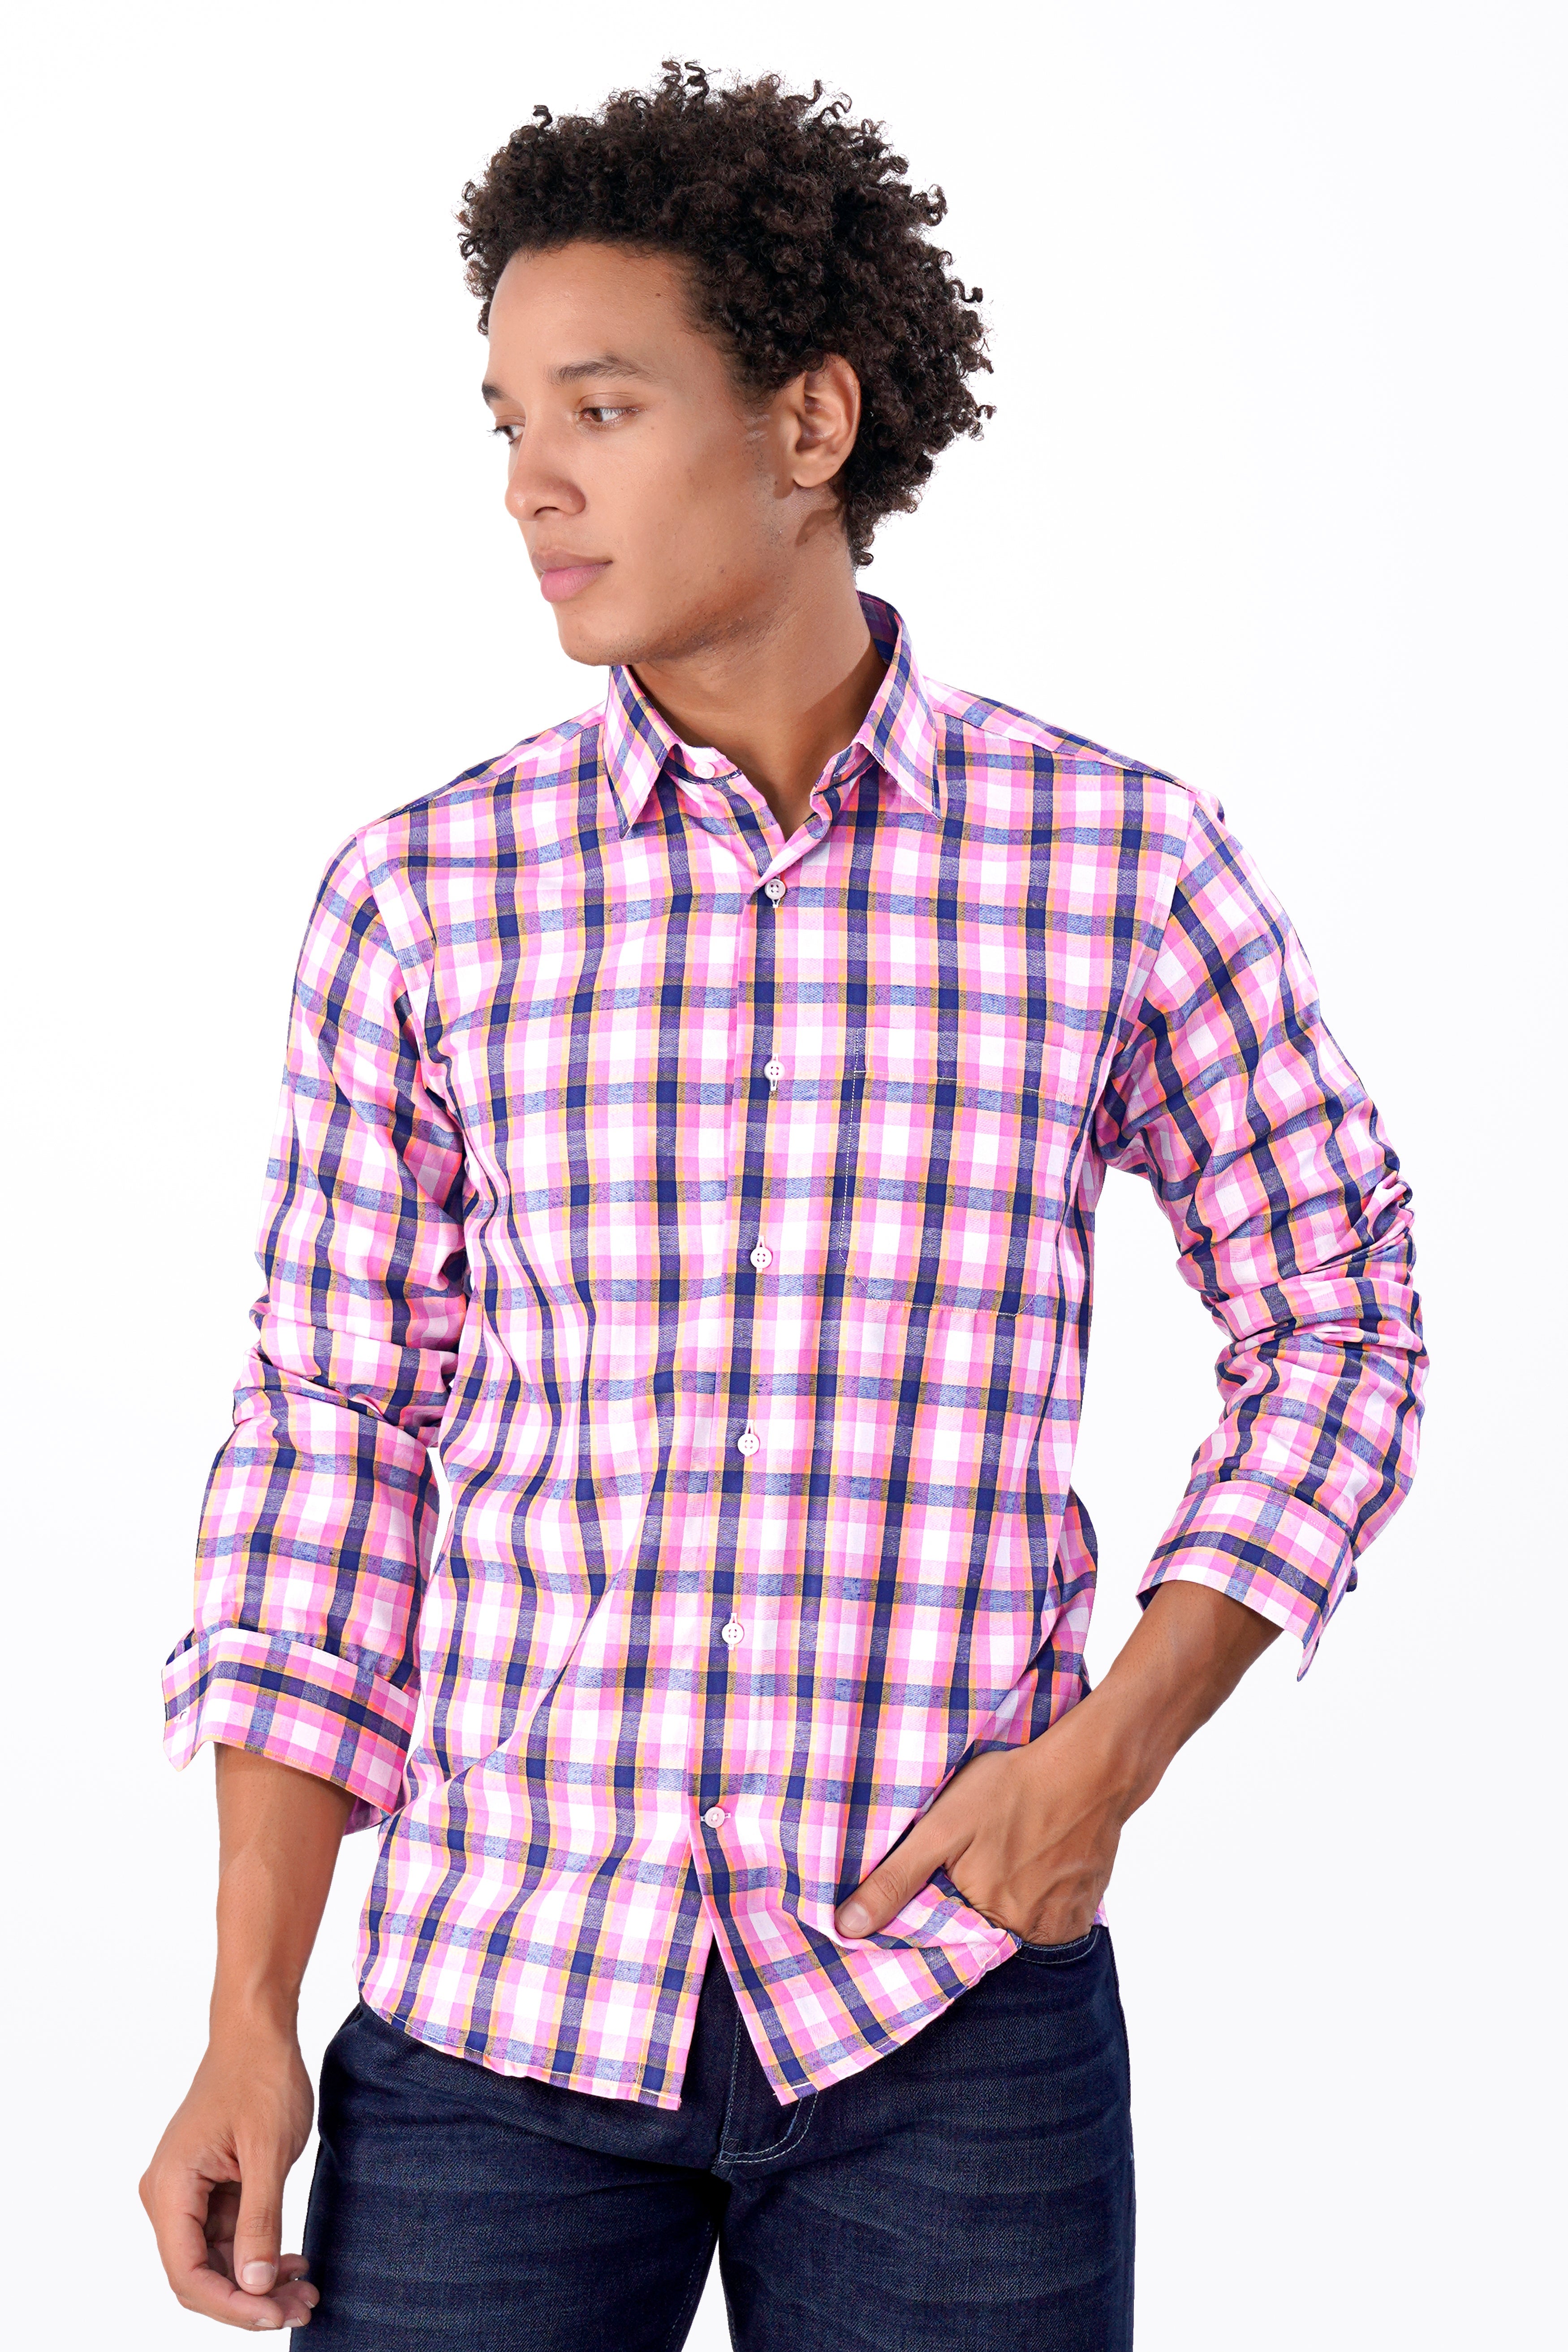 Orchid Pink and Iris Purple Checkered Premium Cotton Shirt